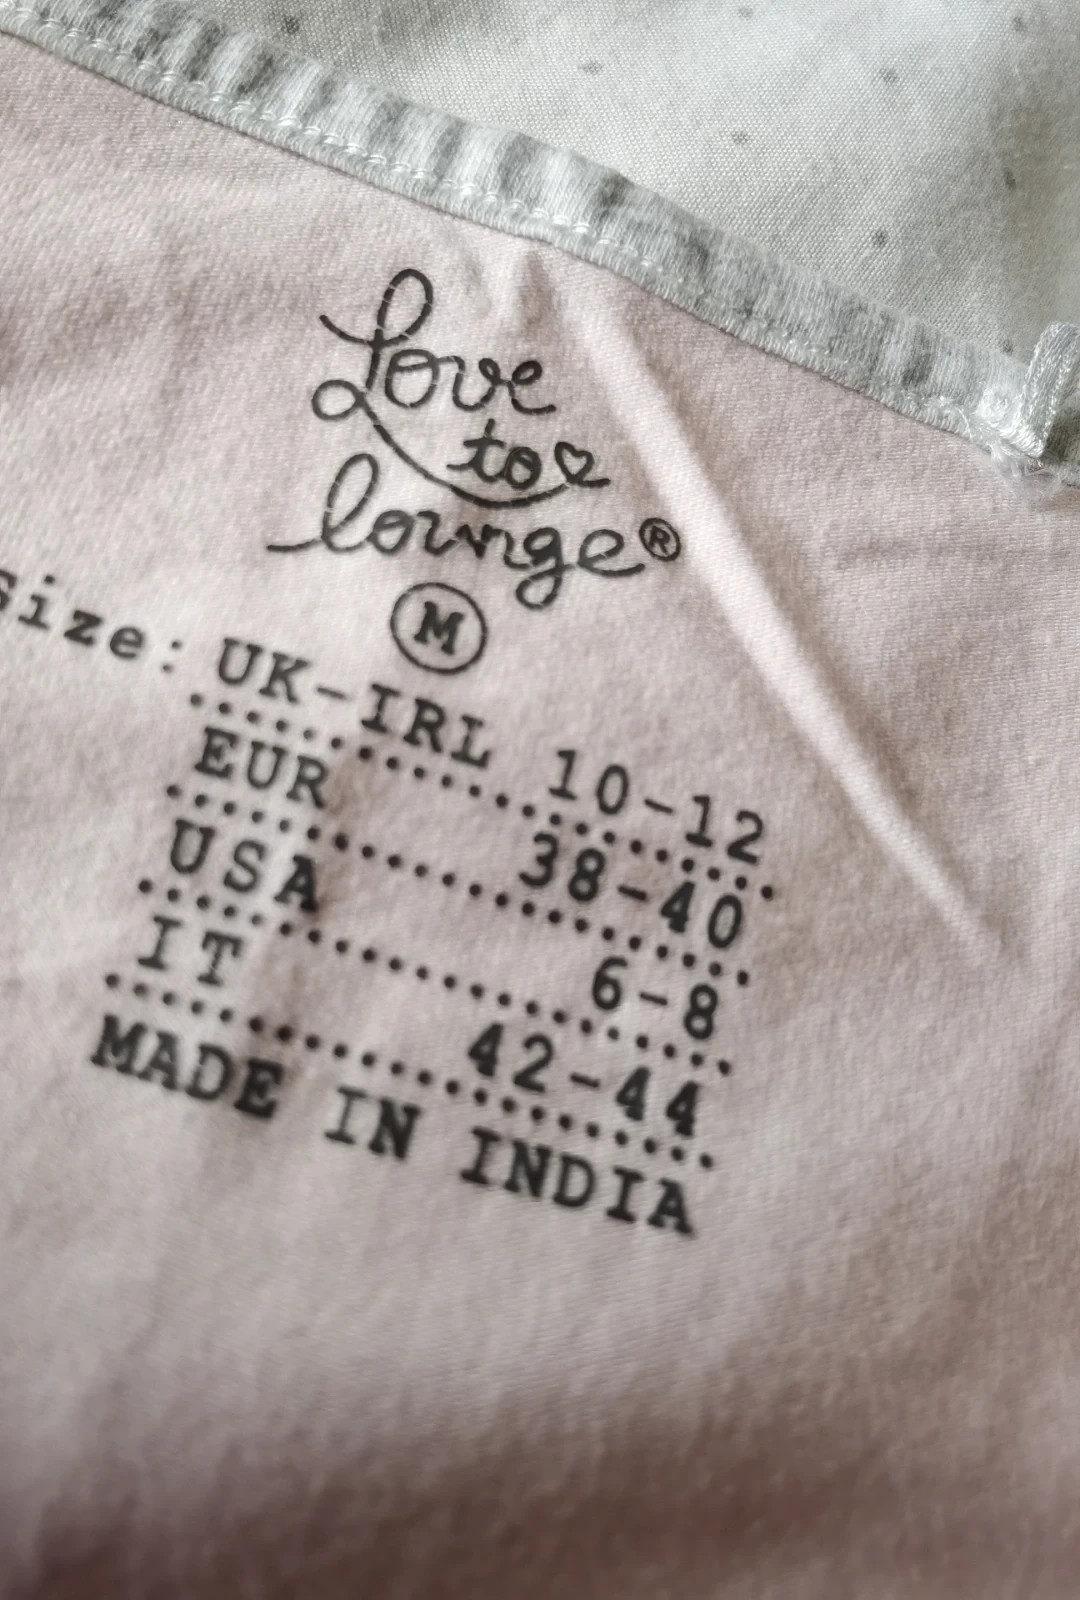 Love to lounge primark follow your dreams pyjama pj vest top size M 10/12